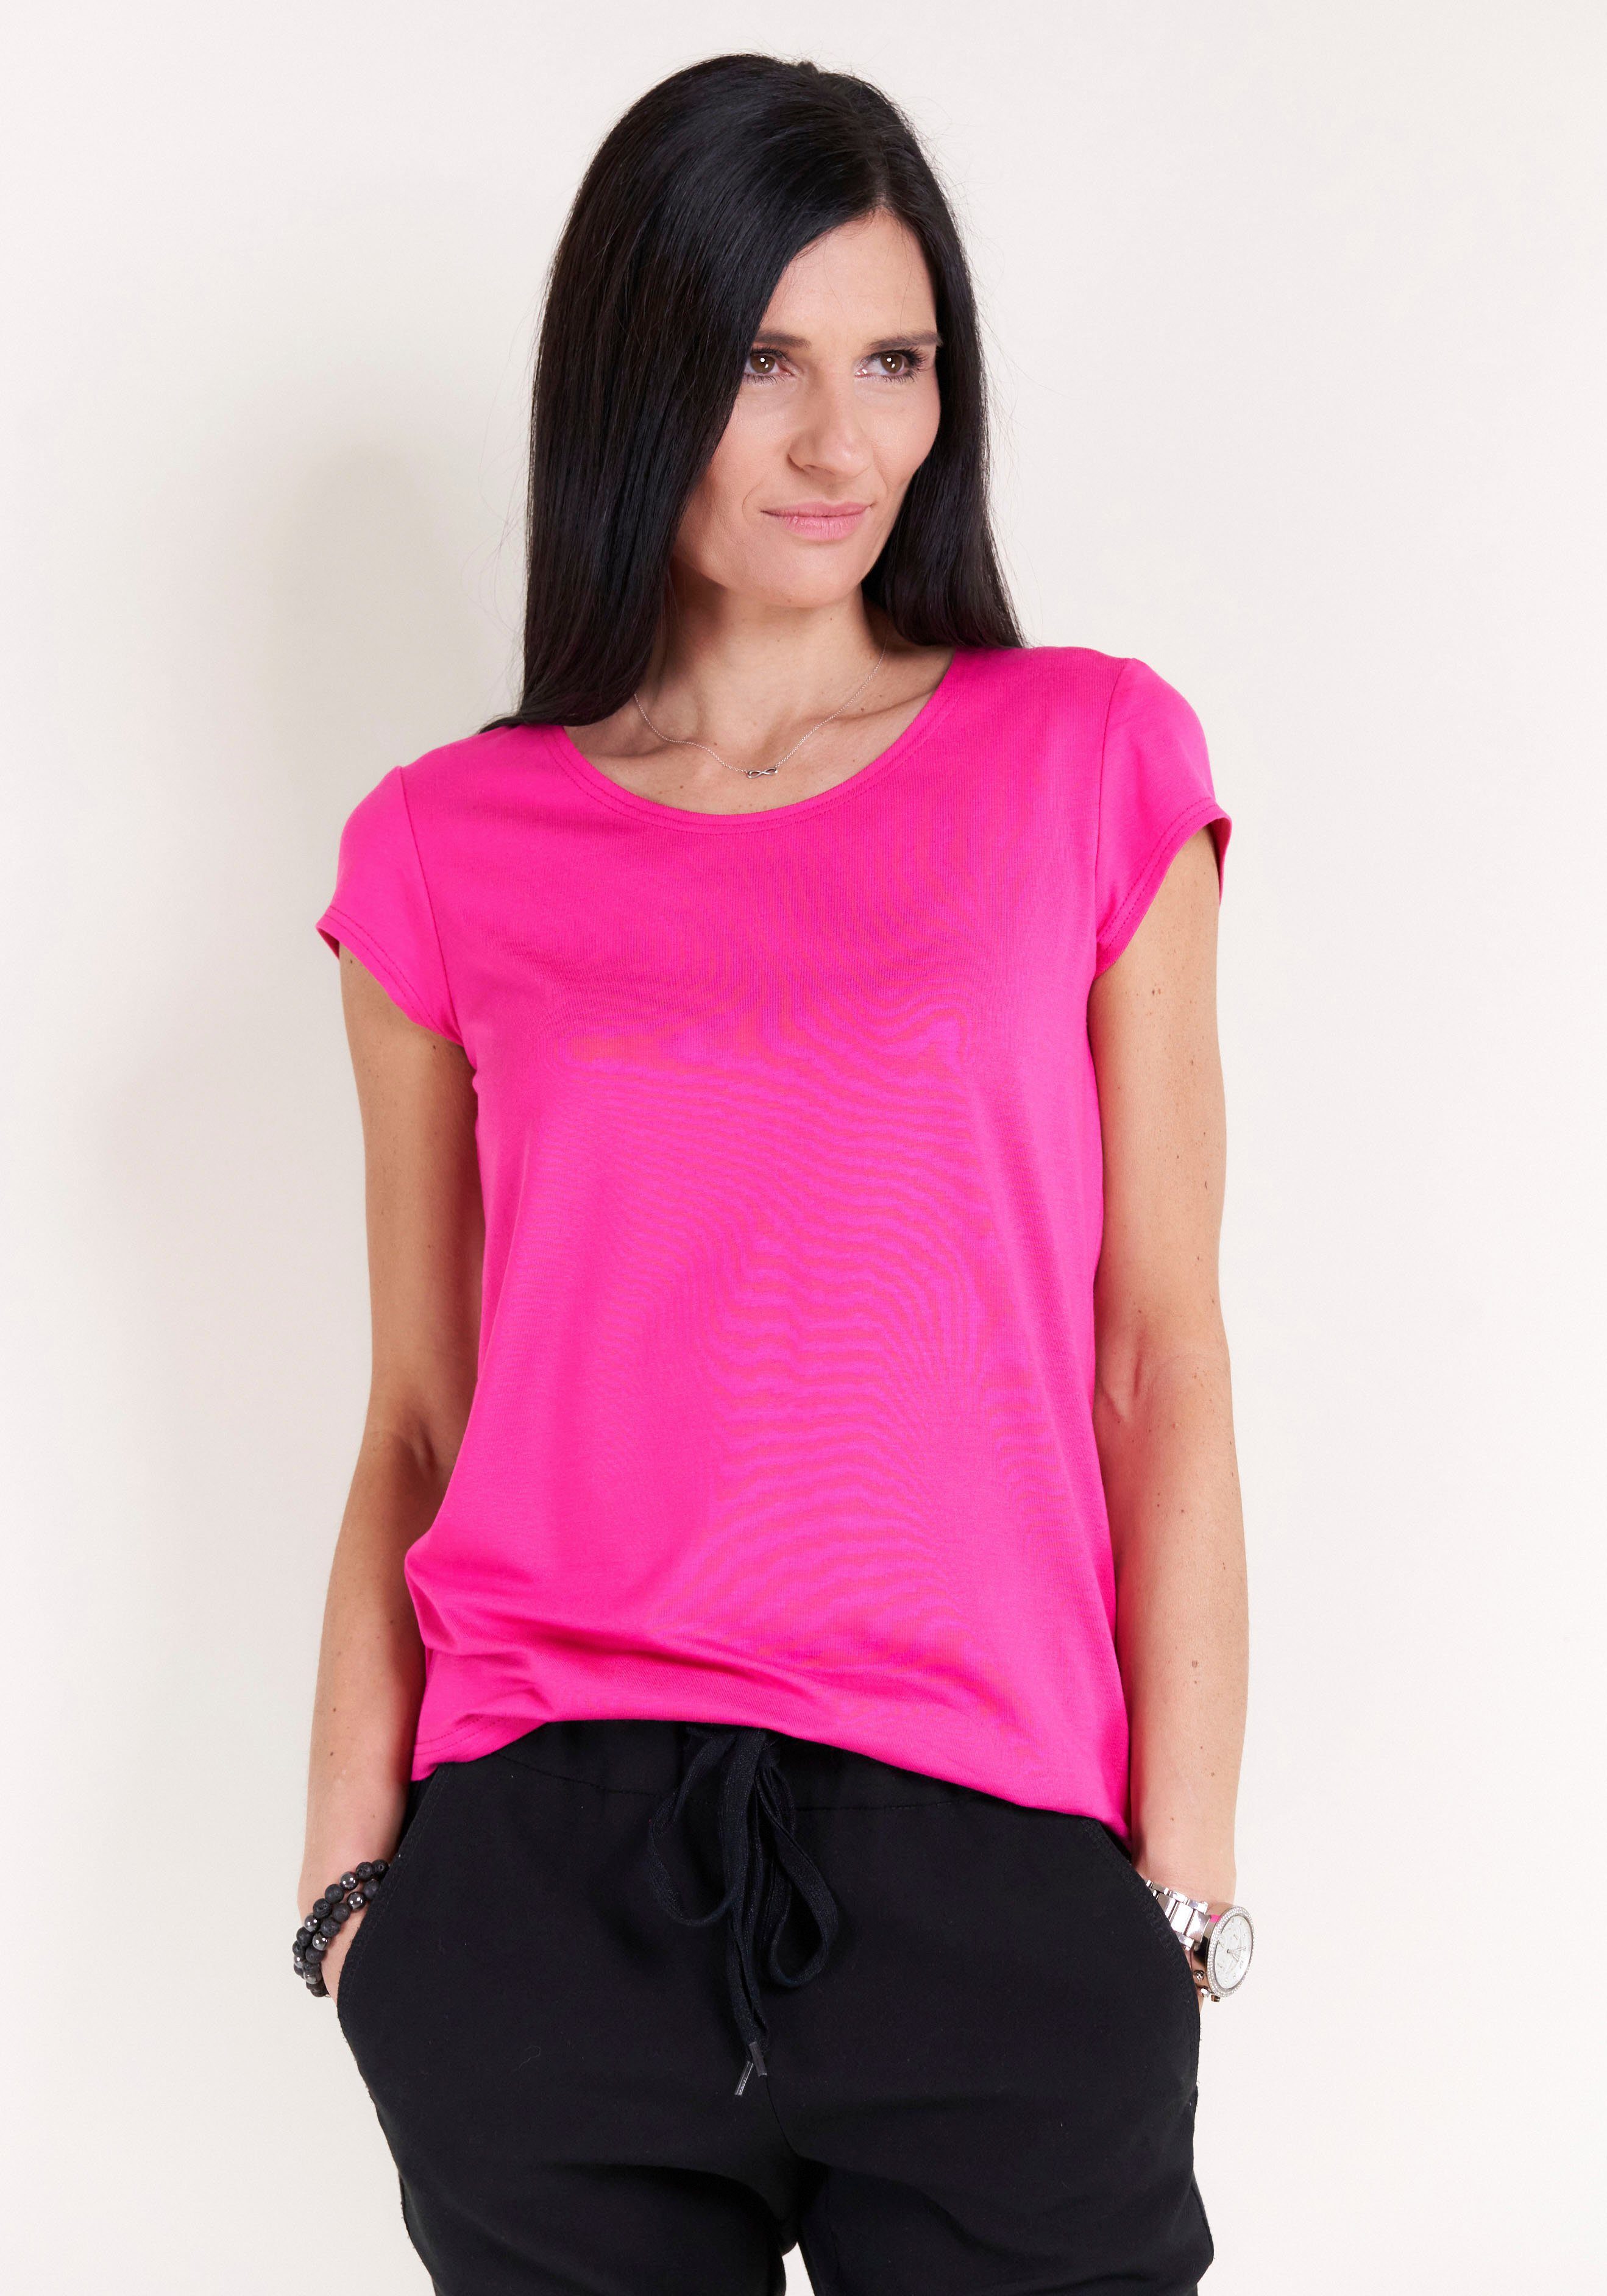 Seidel Moden T-Shirt Seidel Moden mit Kappenärmel, MADE IN GERMANY pink | T-Shirts